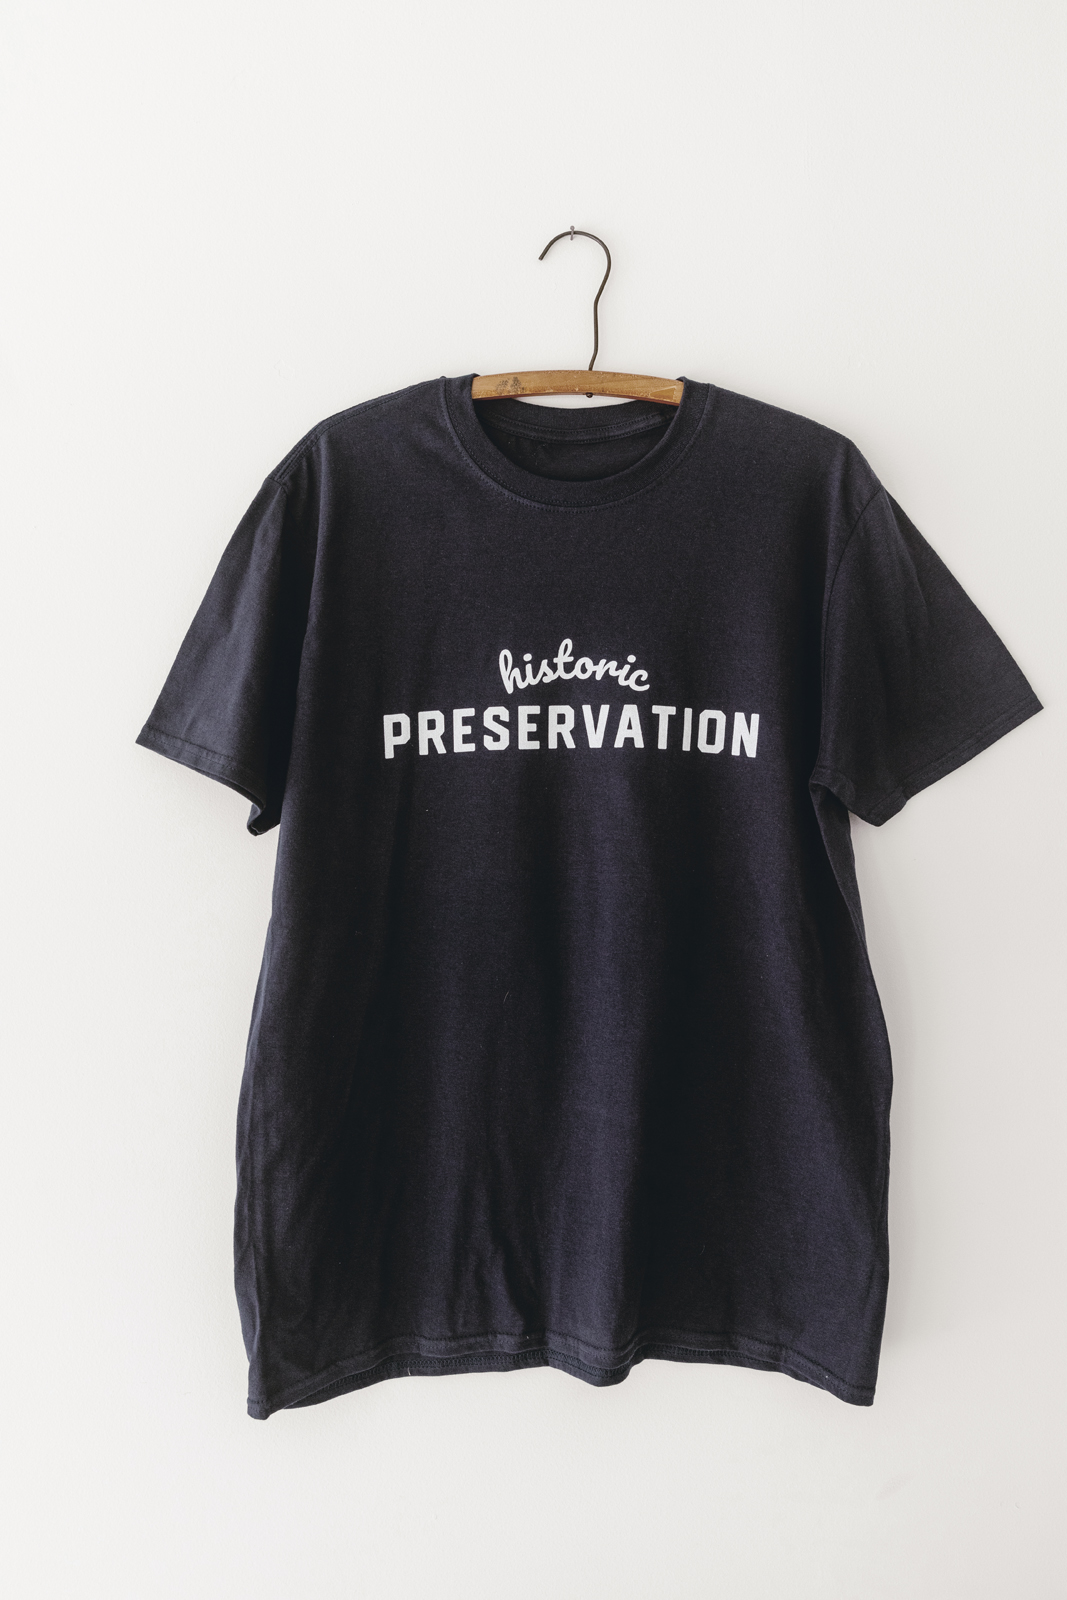 Historic Preservation graphic t-shirt